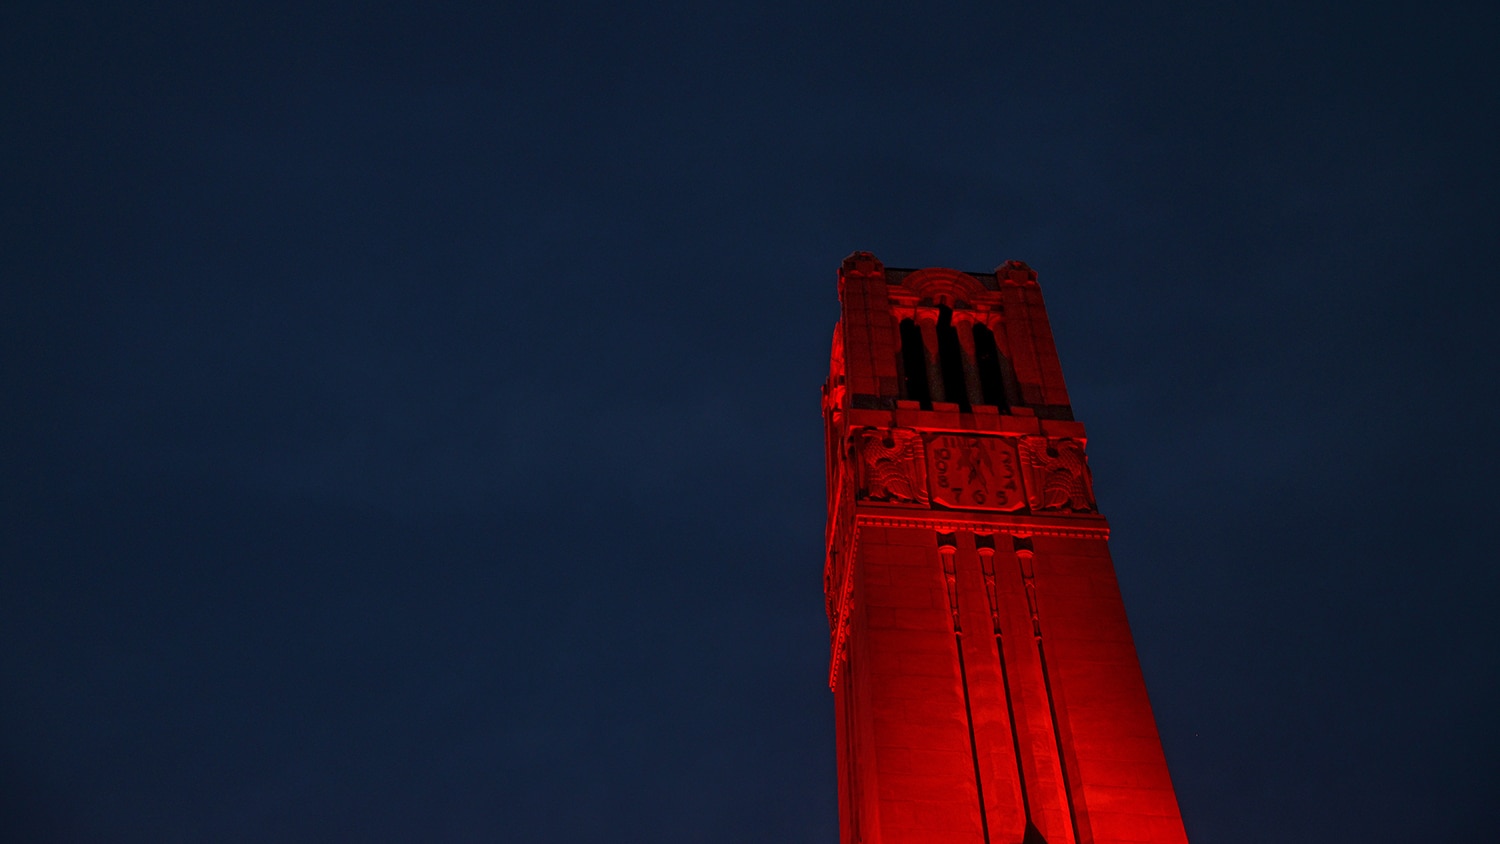 The Belltower lit red